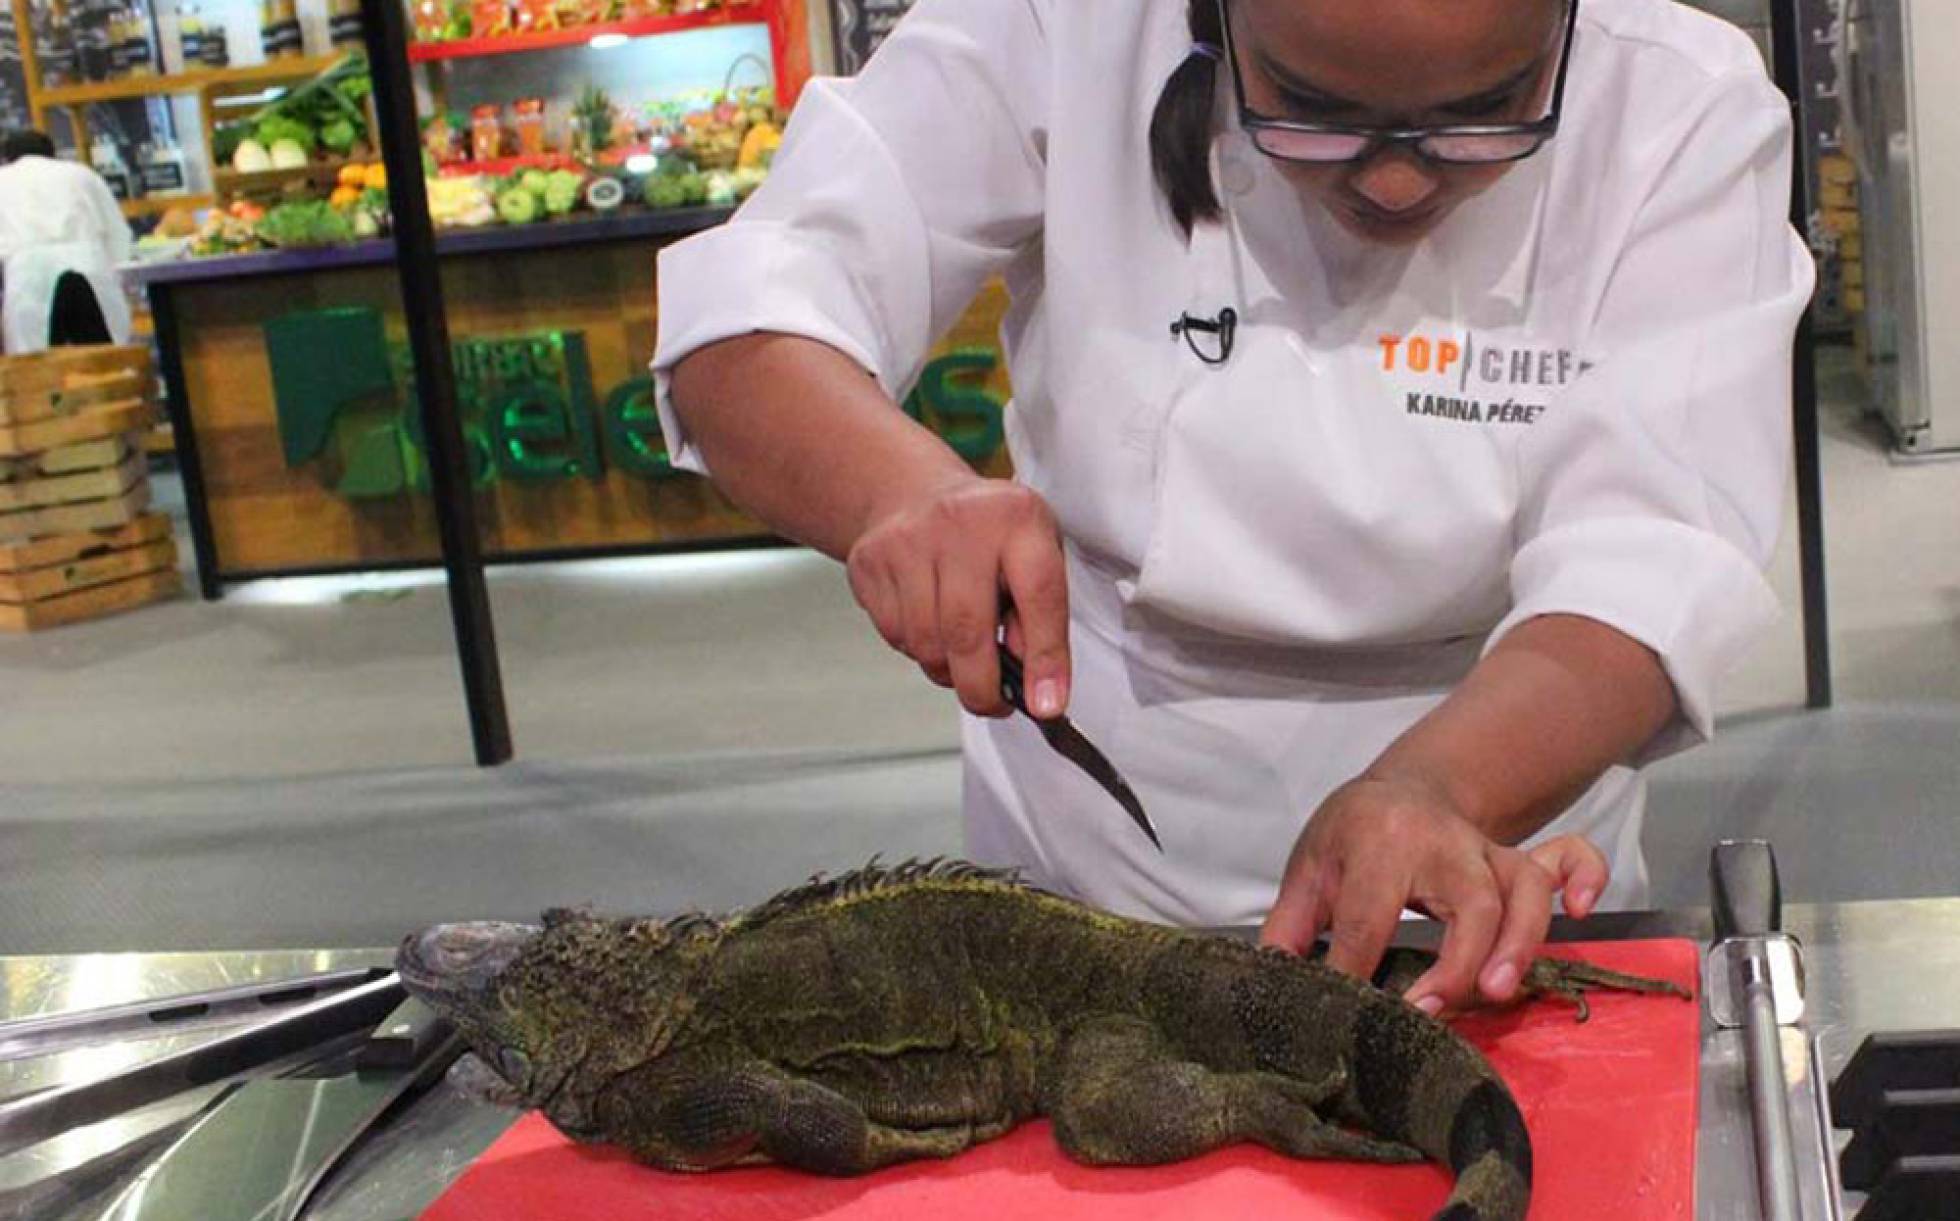 Salvador. La cuisine d'iguane dans Top Chef suscite l'indignation